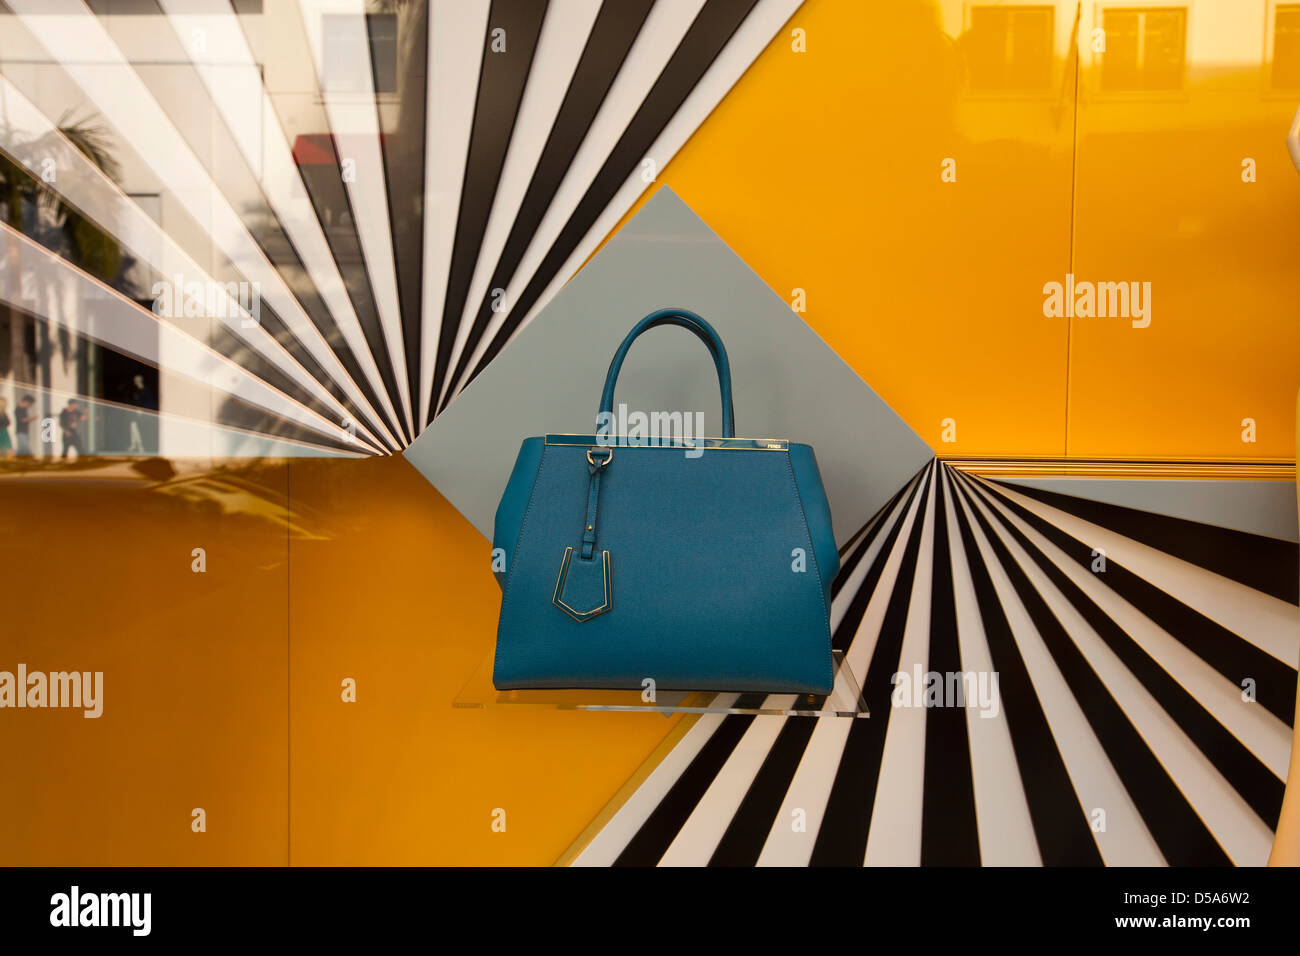 Window display handbags hi-res stock photography and images - Alamy